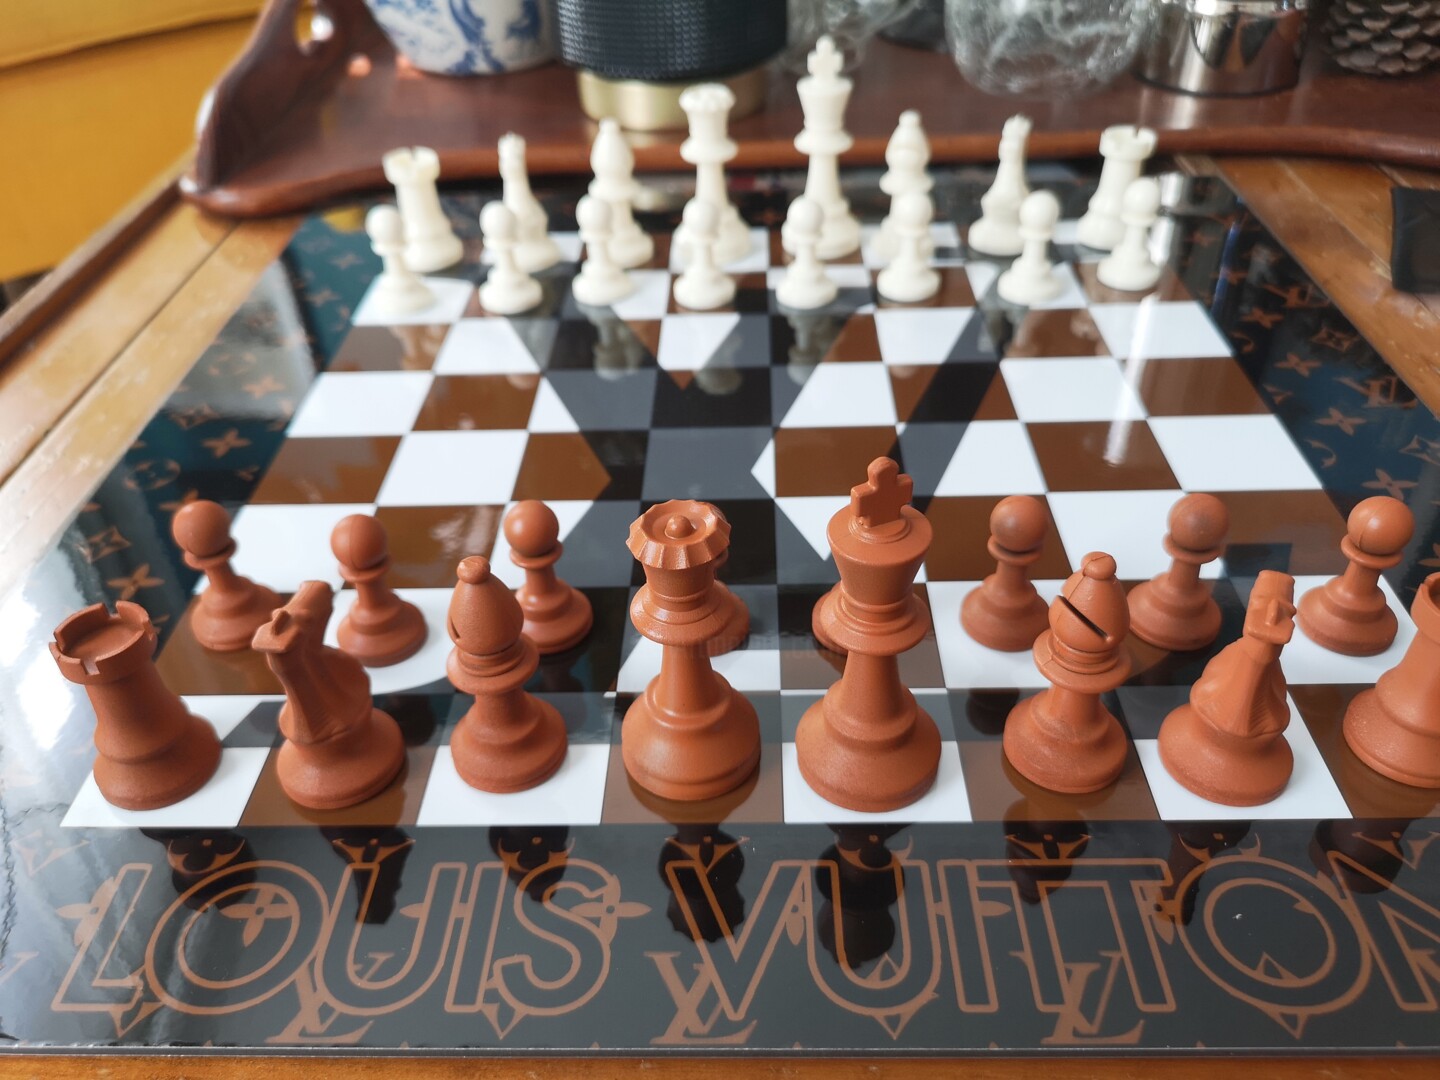 UPDATED VERSION: Louis Vuitton Chess Photo